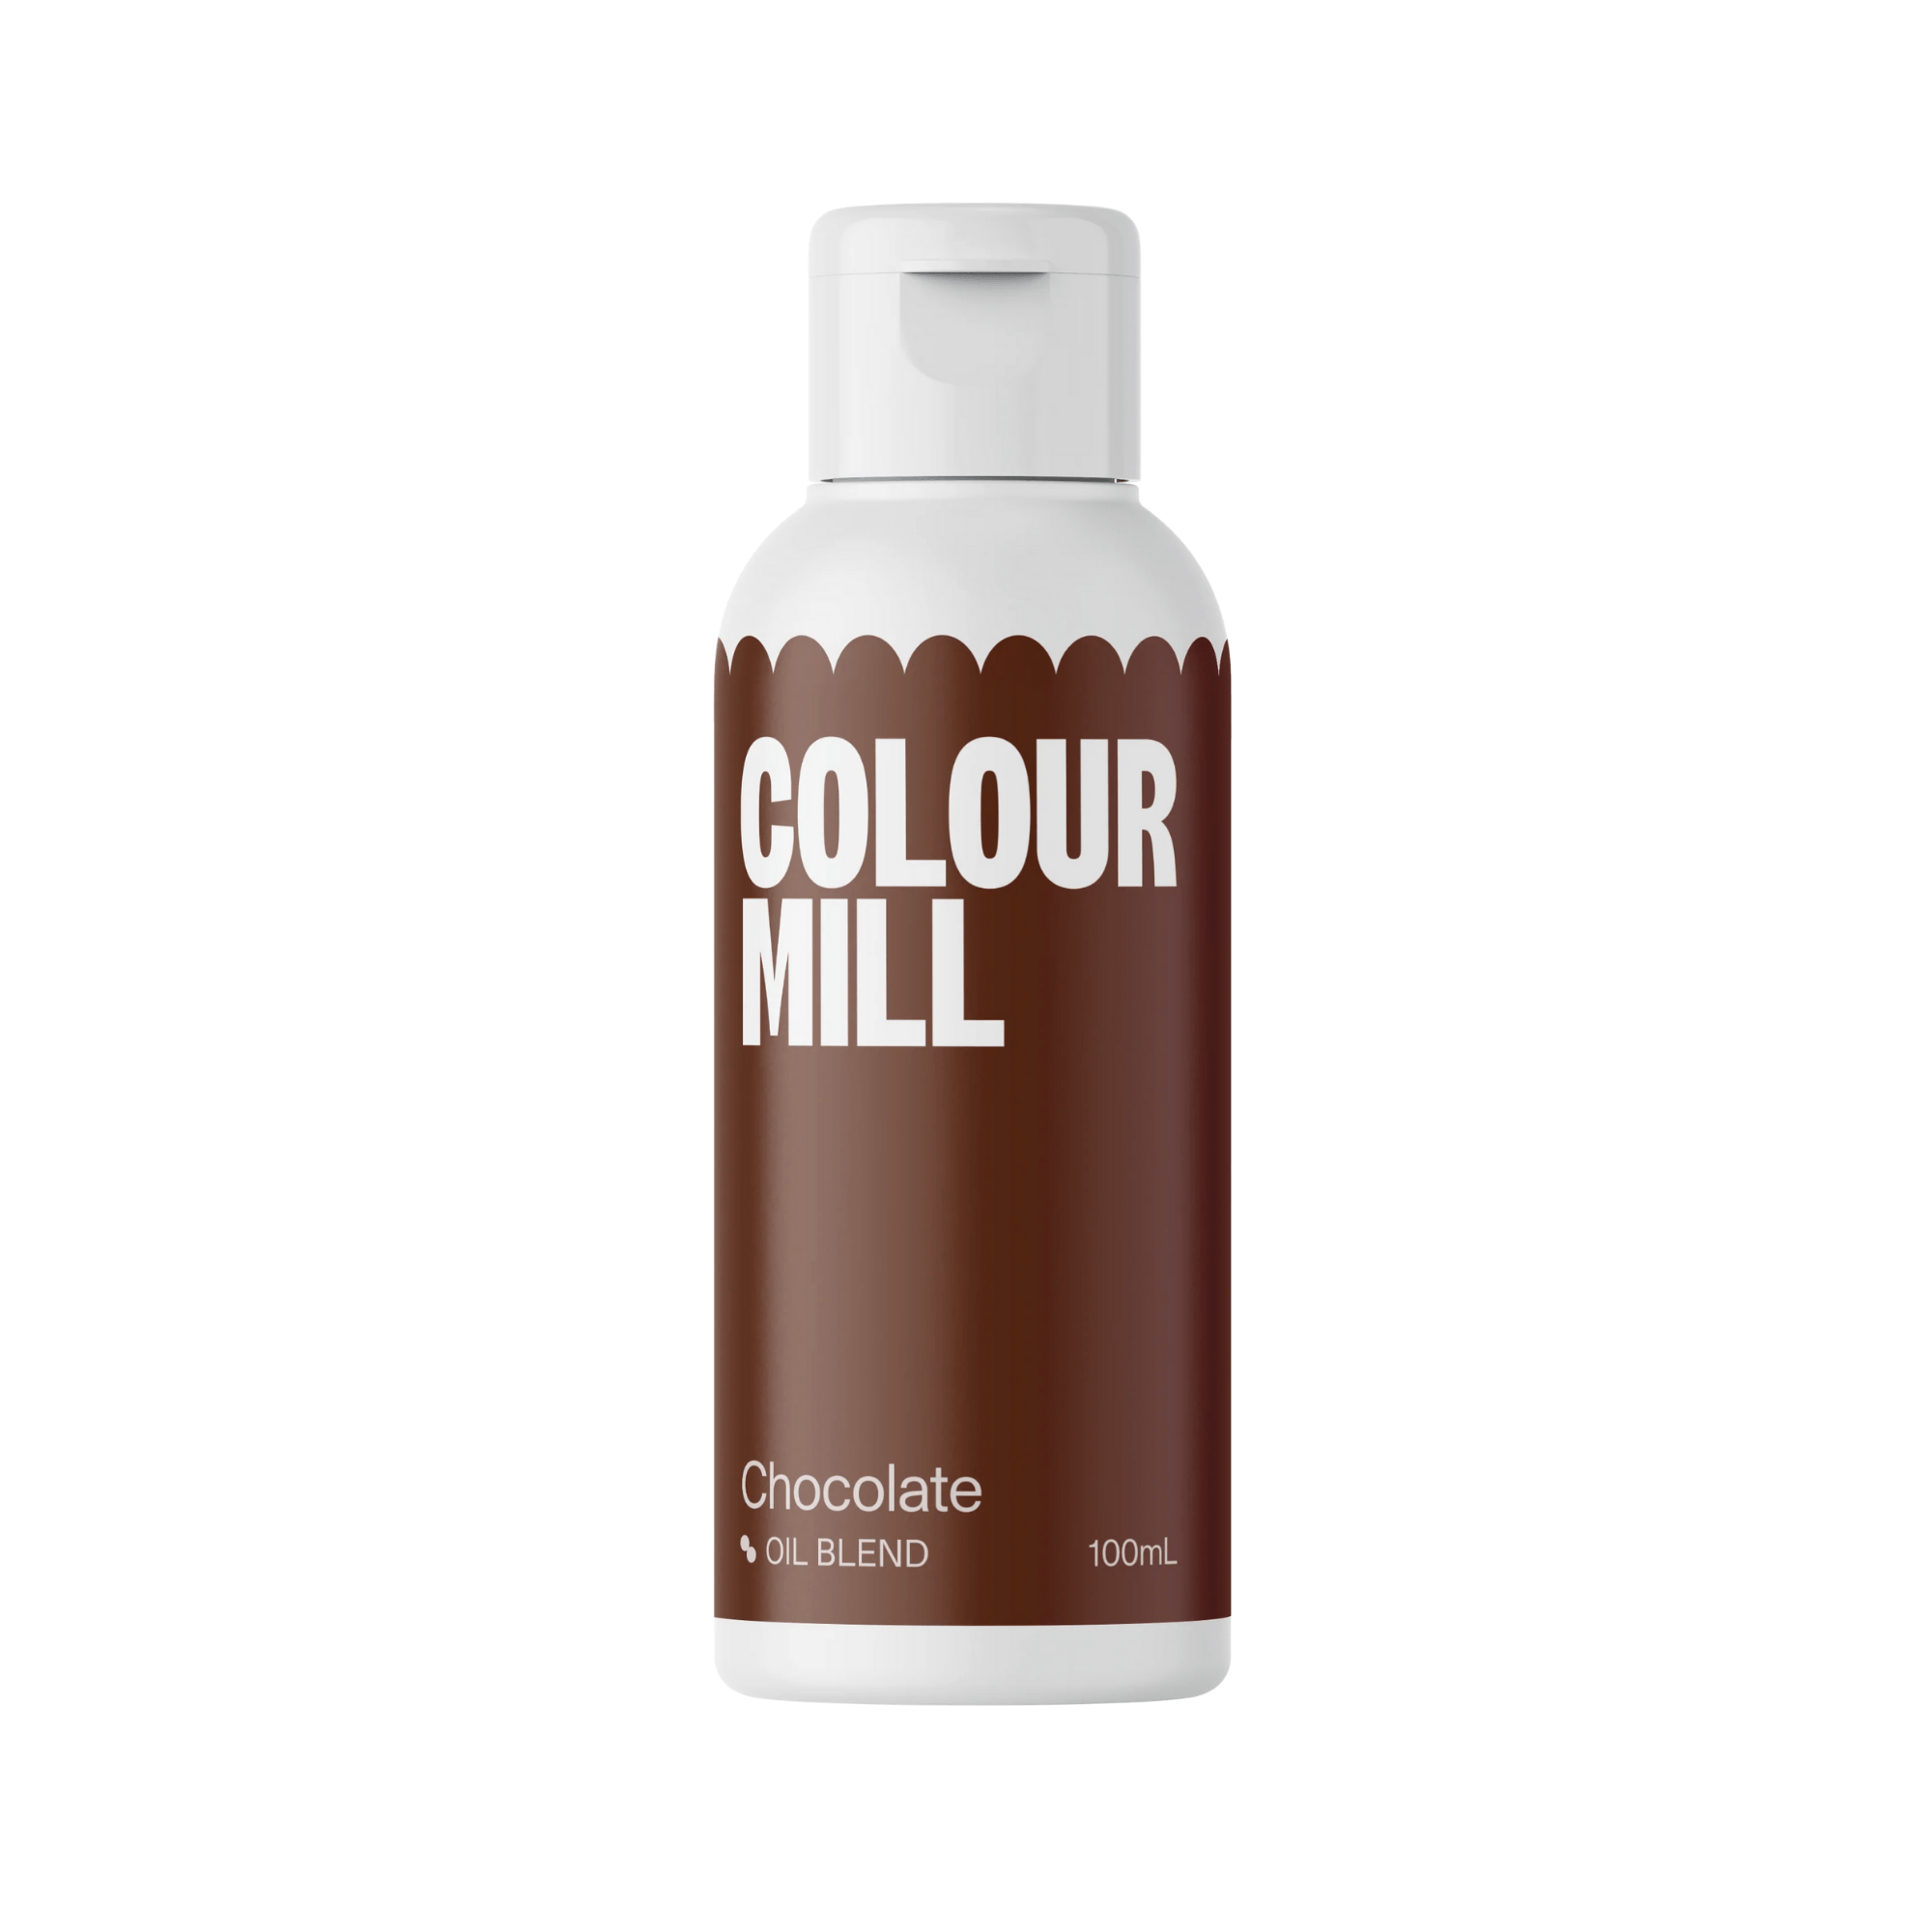 Happy Sprinkles Streusel 100ml Colour Mill Chocolate - Oil Blend